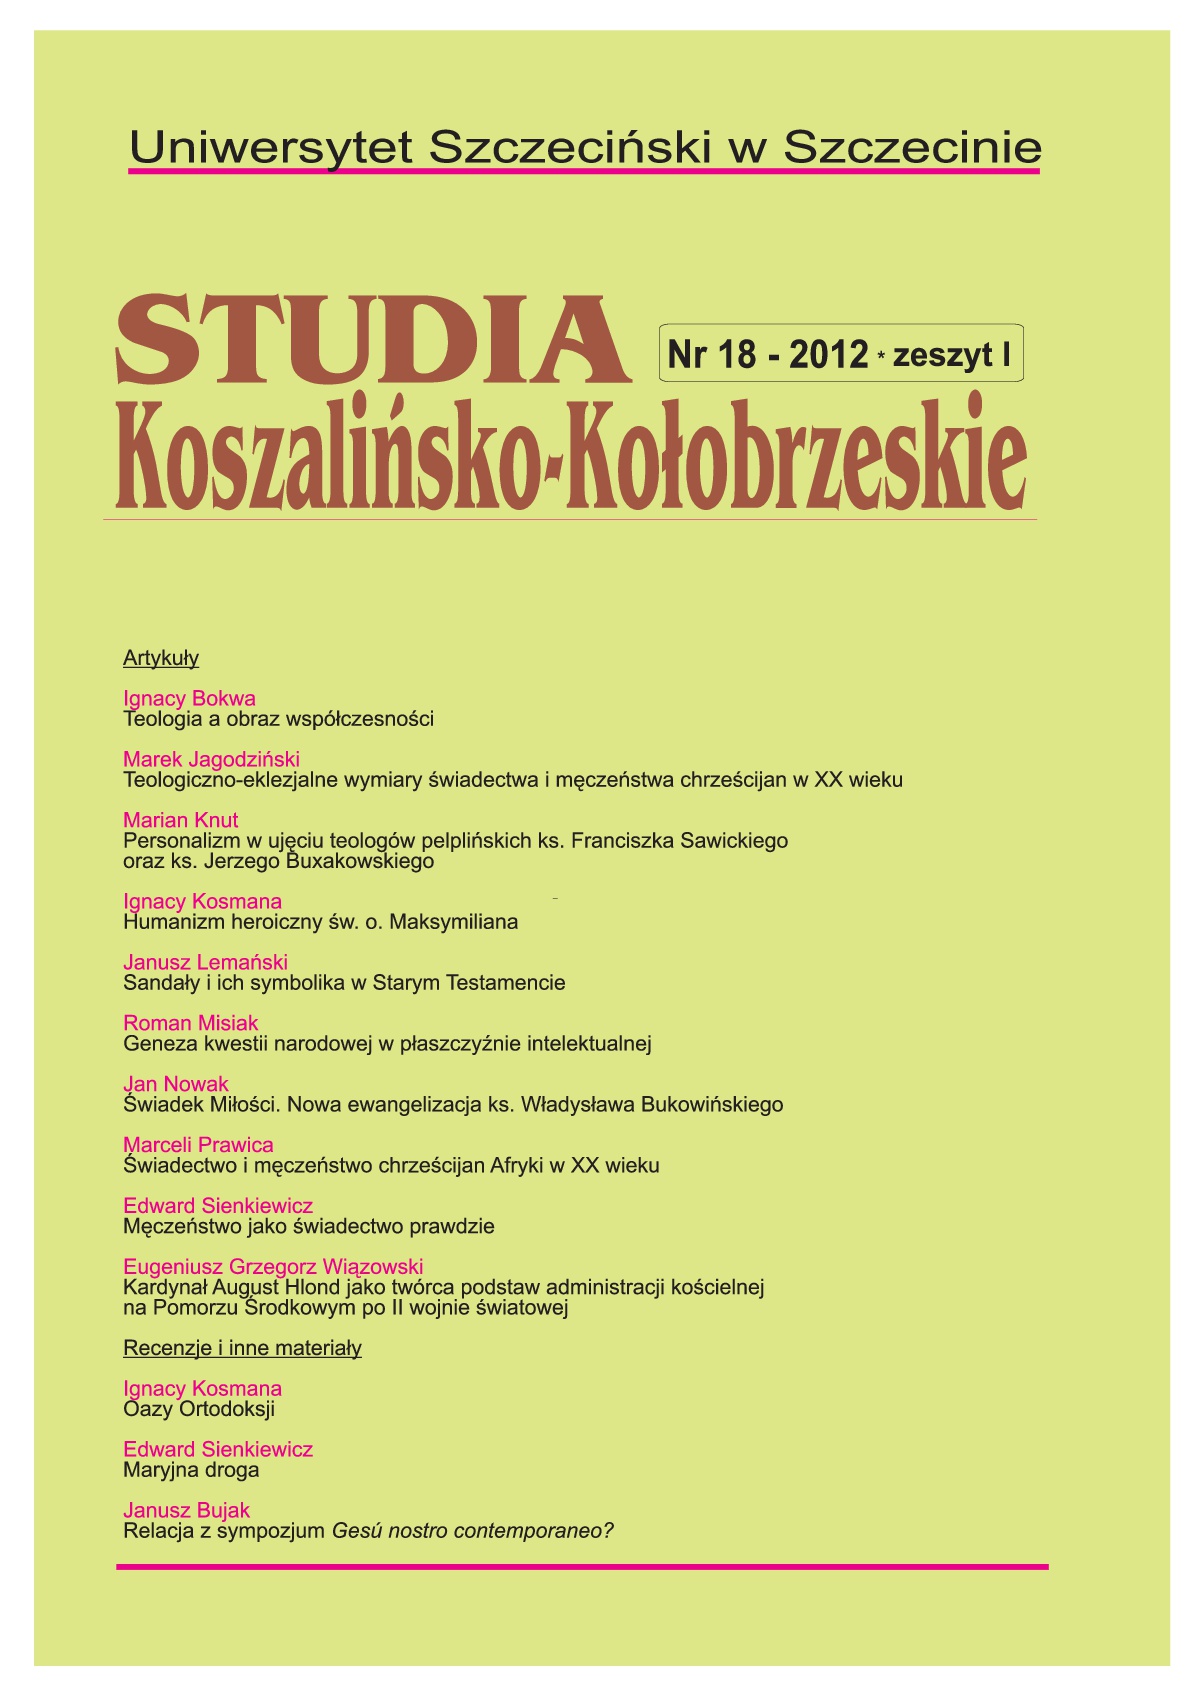 Report from the Gesù nostro contemporaneo symposium? Cover Image